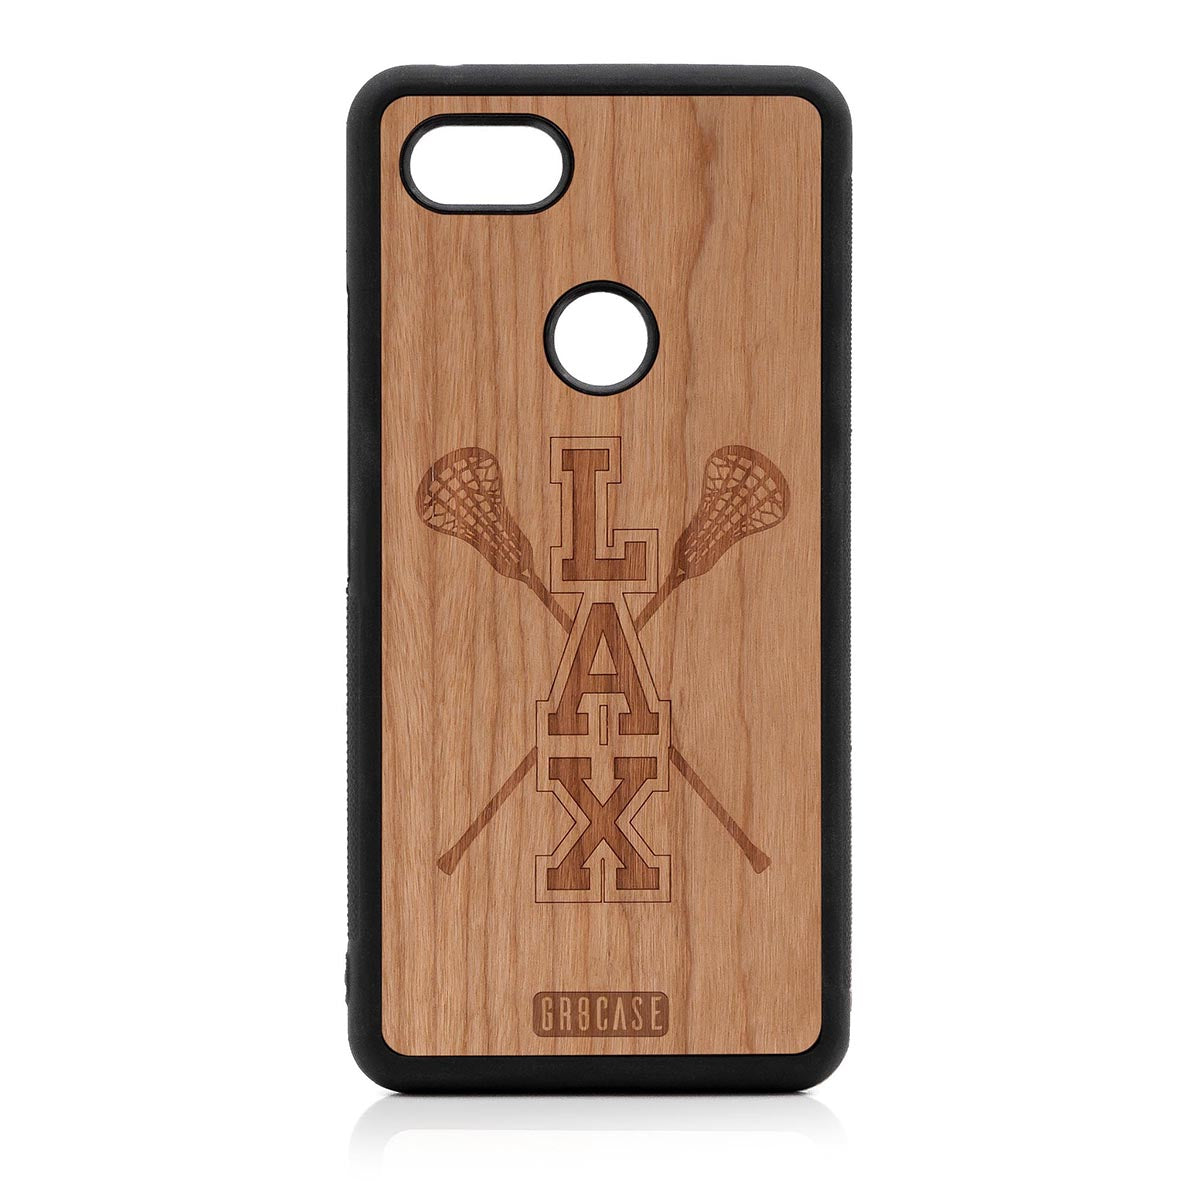 Lacrosse (LAX) Sticks Design Wood Case Google Pixel 3 XL by GR8CASE